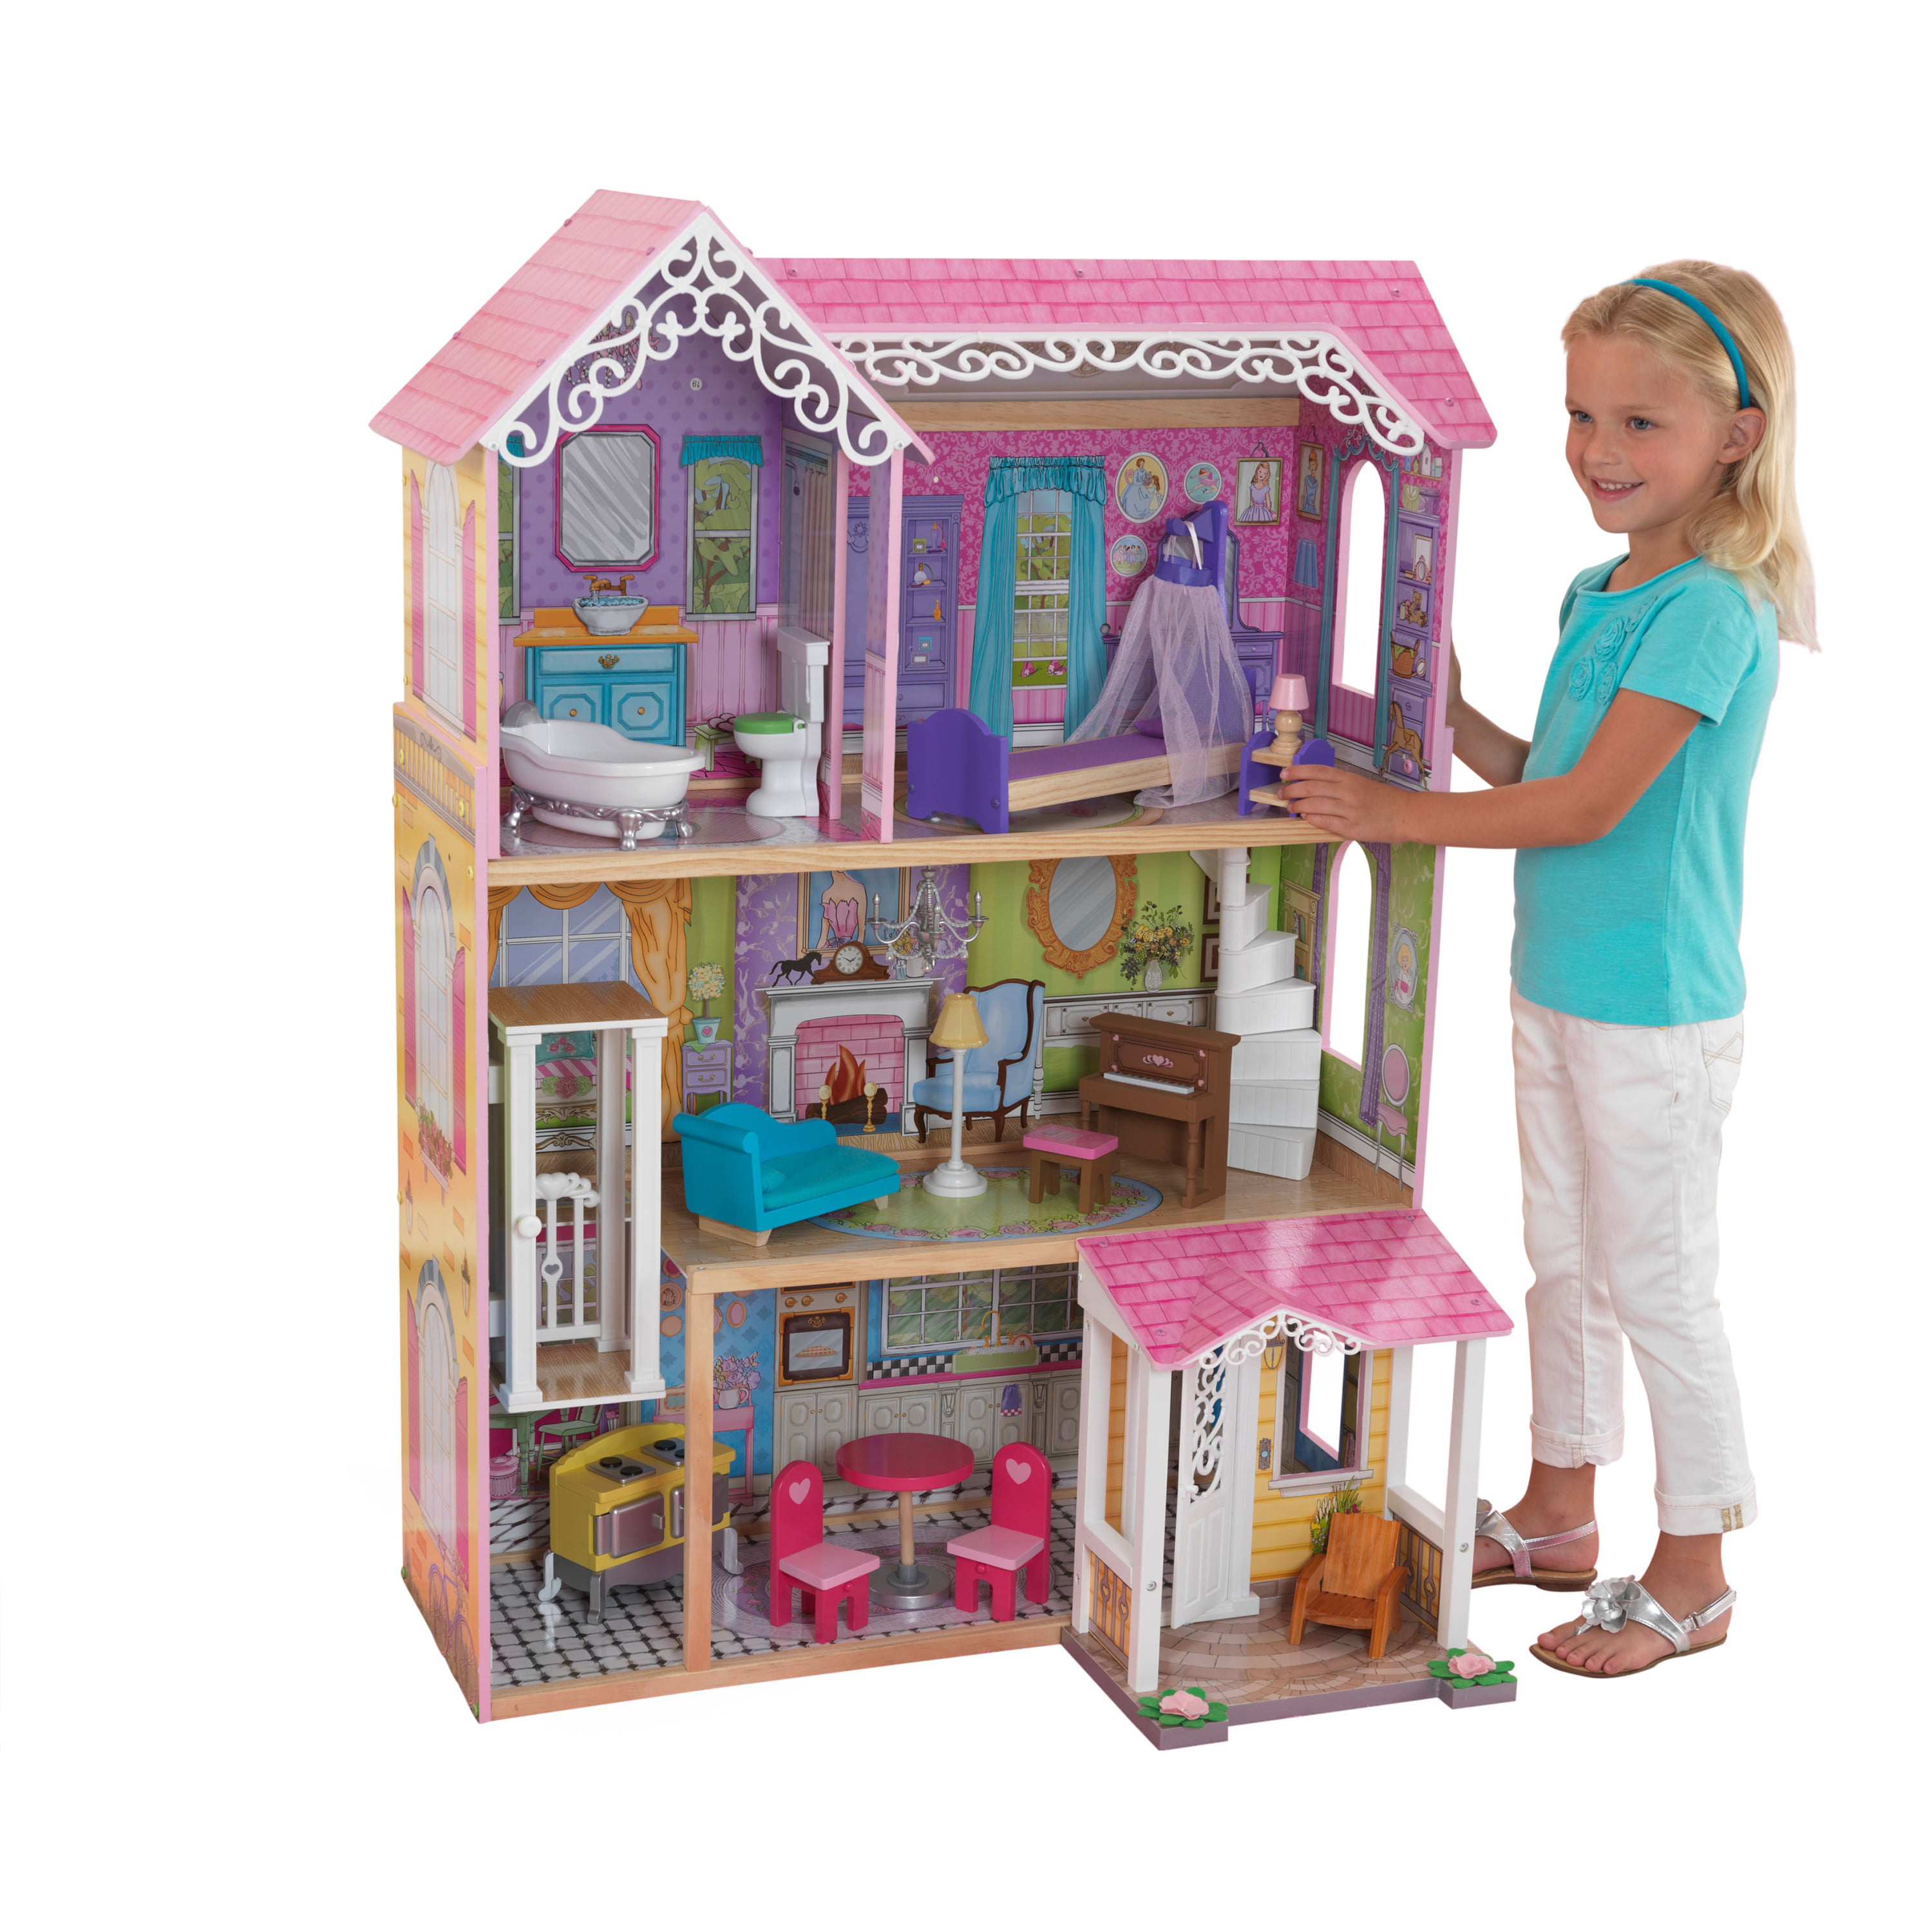 Kidkraft Magnolia MansionWooden Dollhouse with Lift fits Barbie Dolls 